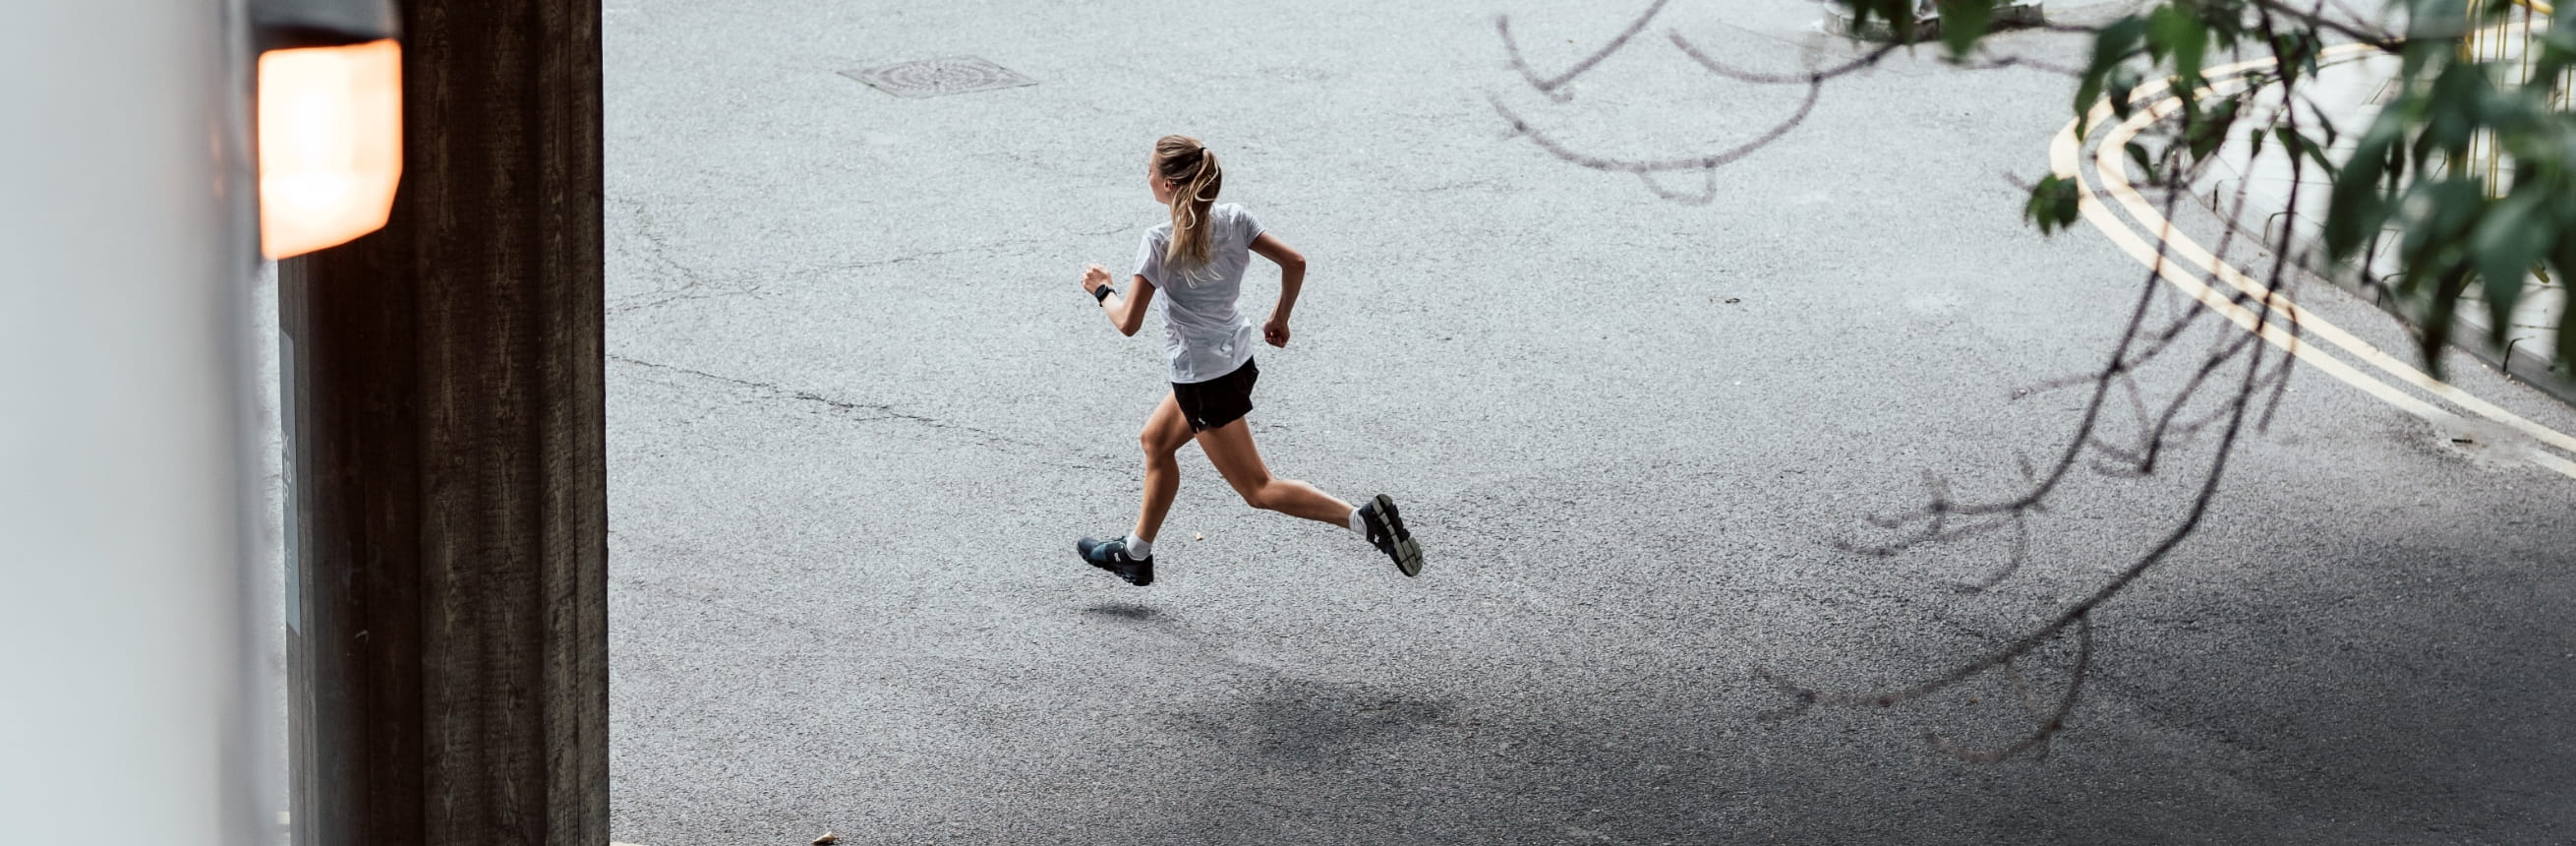 A woman runs through the streets of London